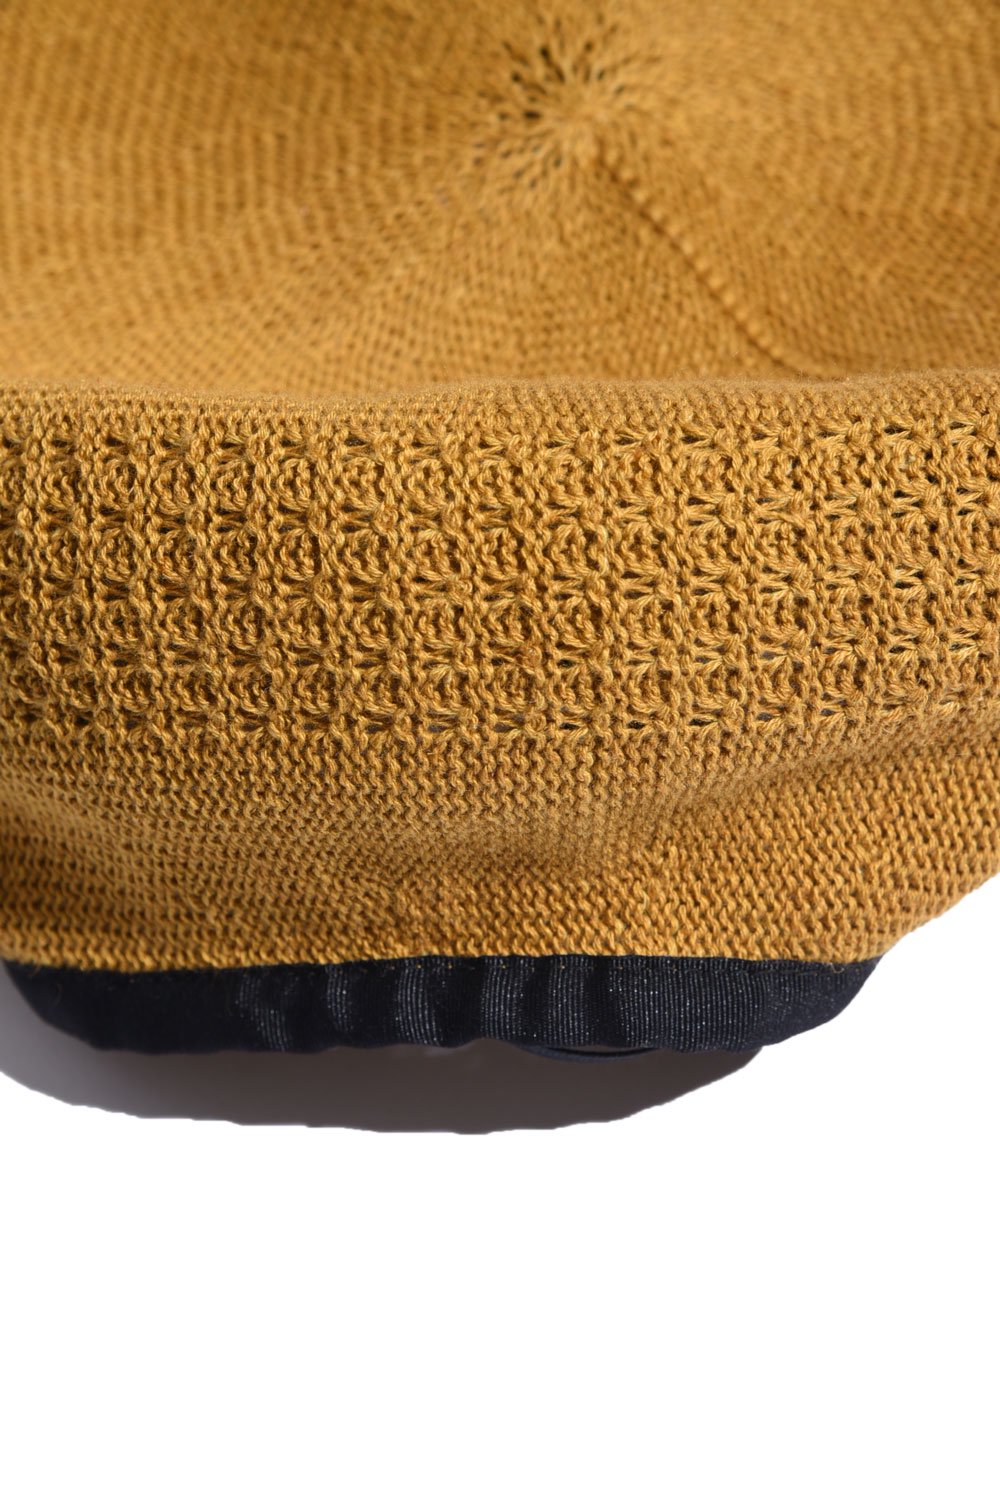 TROPHY CLOTHING(トロフィークロージング) ベレー帽 RUSSEL BASQUE 